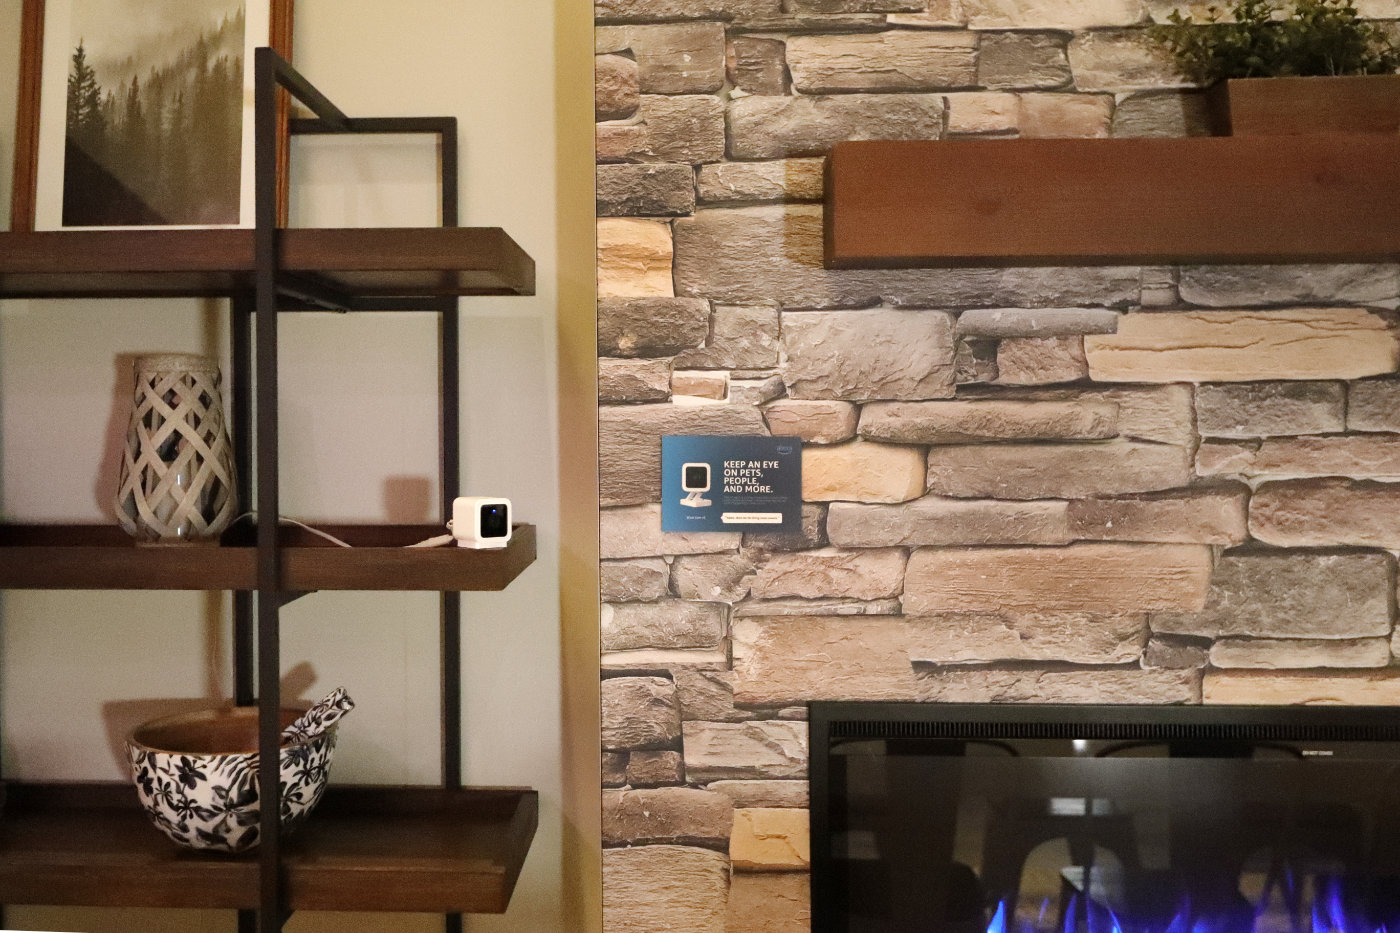 An Alexa home camera is set up on a book shelf.